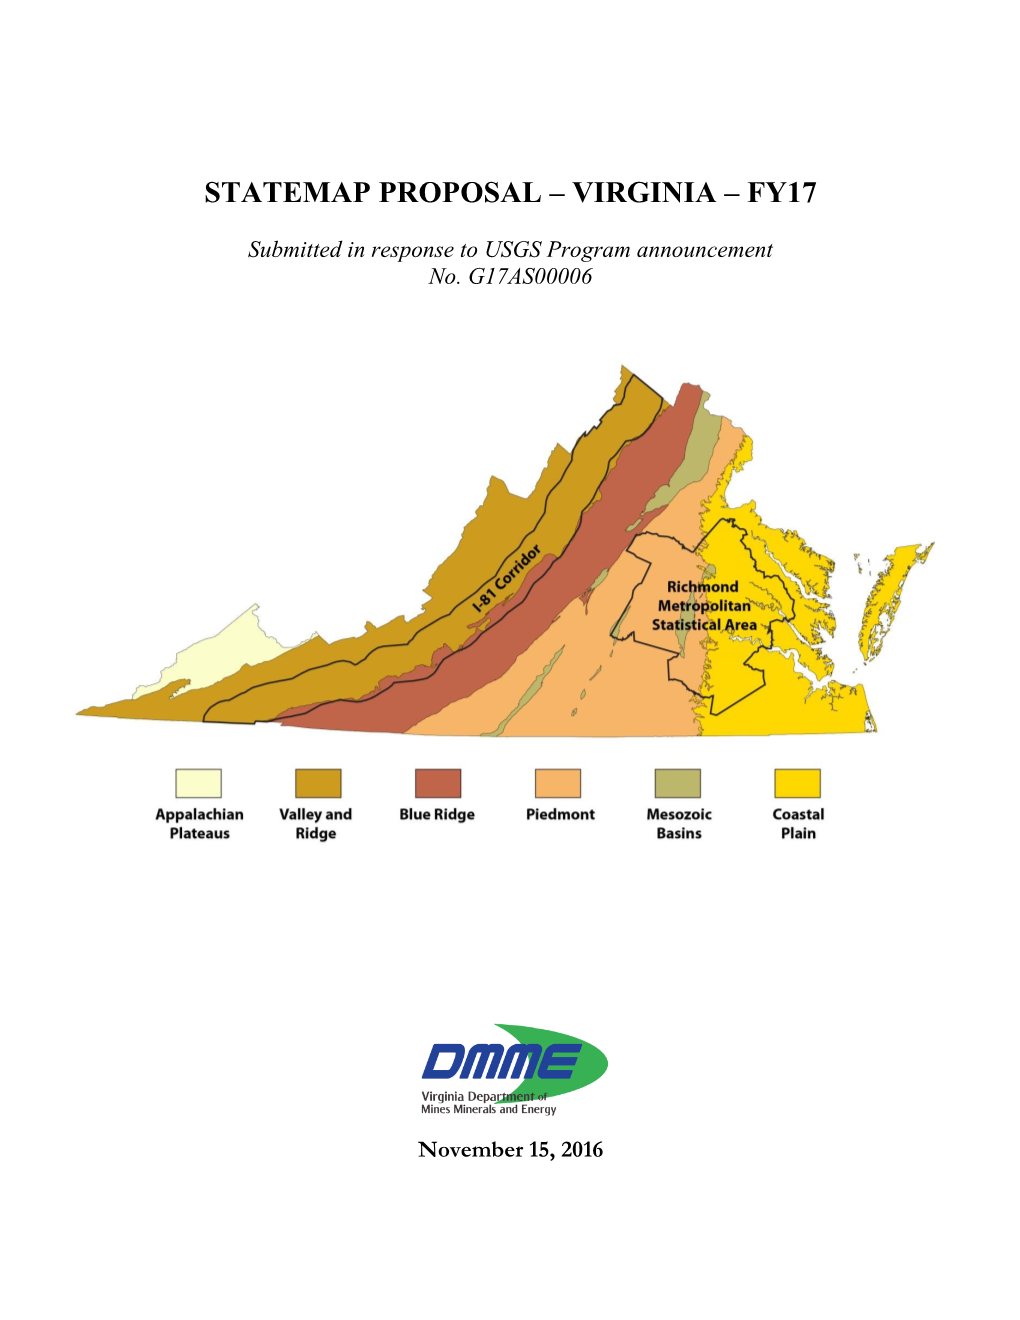 Statemap Proposal – Virginia – Fy17